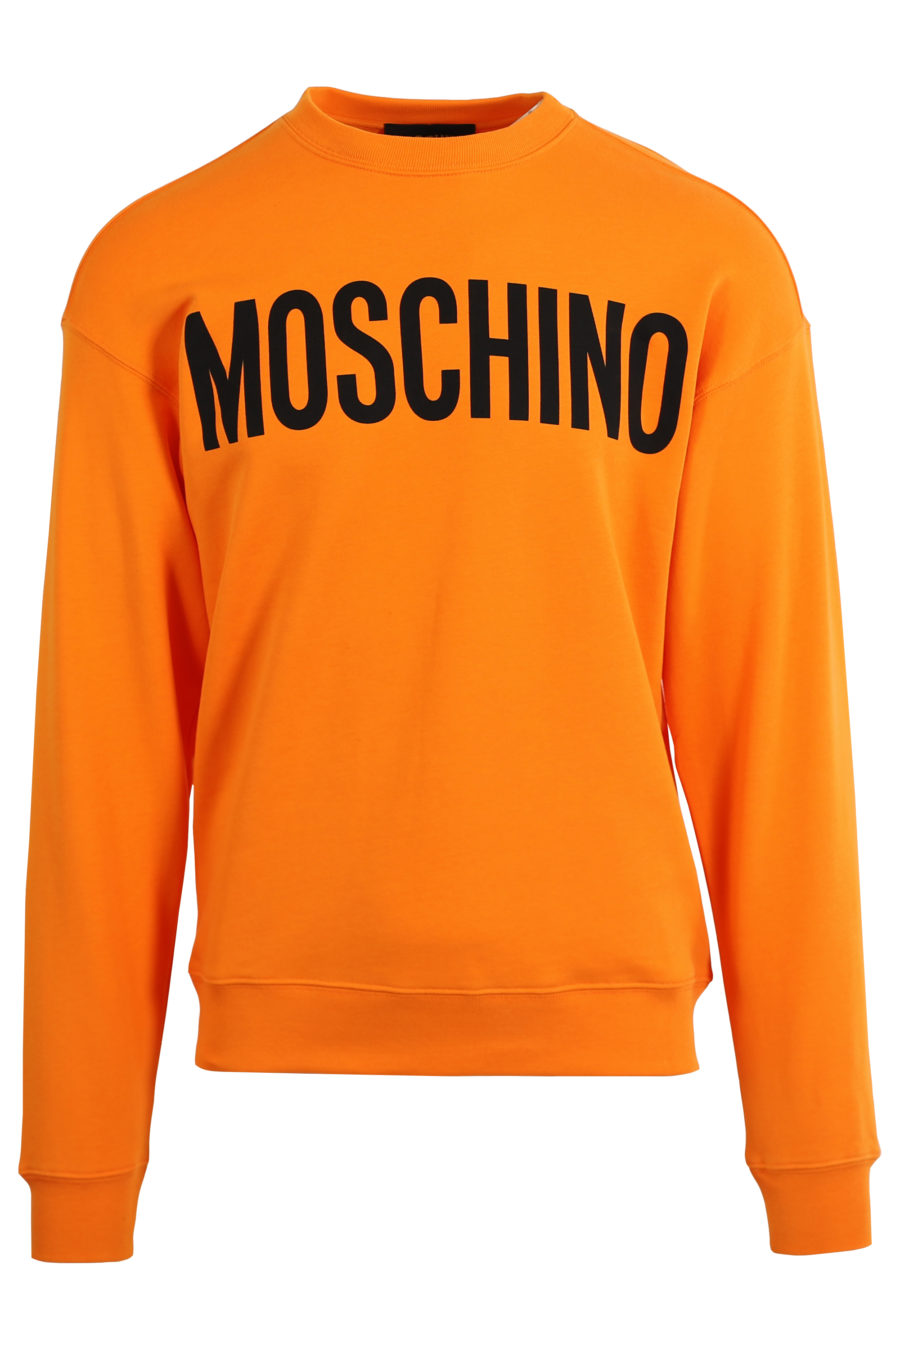 Sweatshirt laranja com logótipo grande à frente - IMG 0991